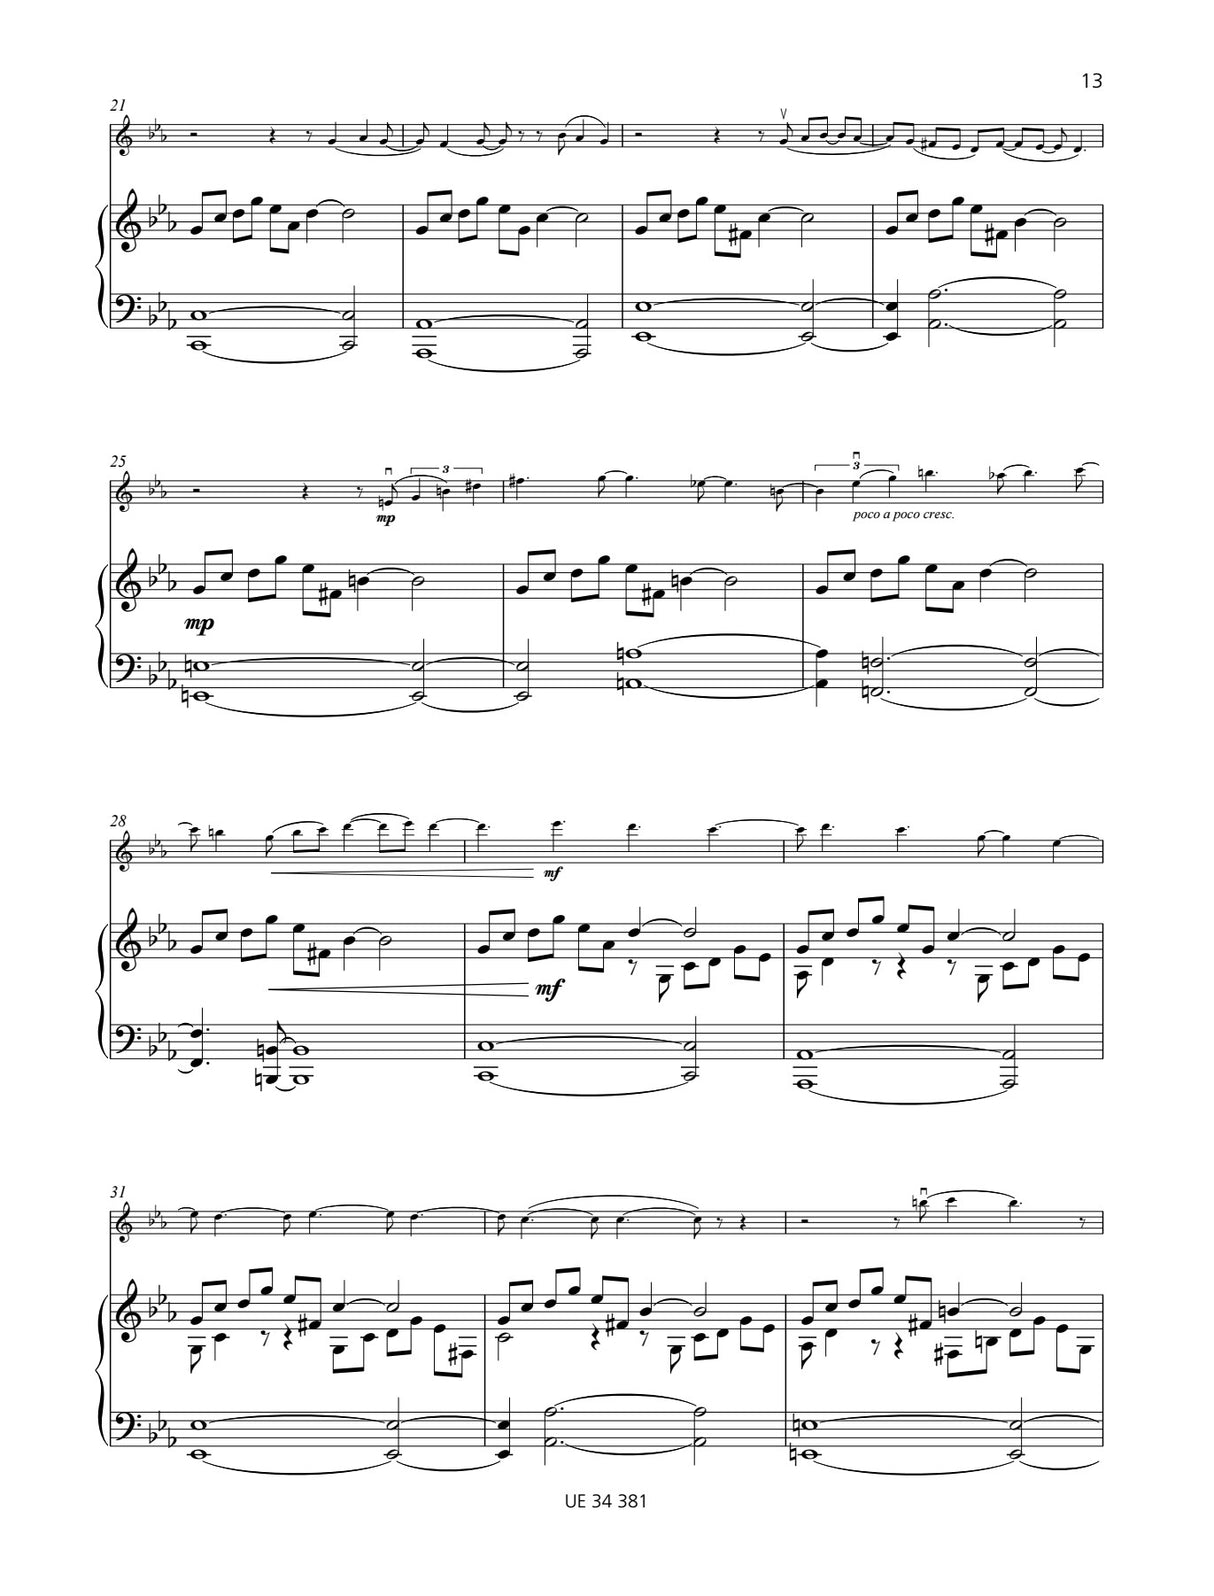 Igudesman: Violin Sonata No. 3